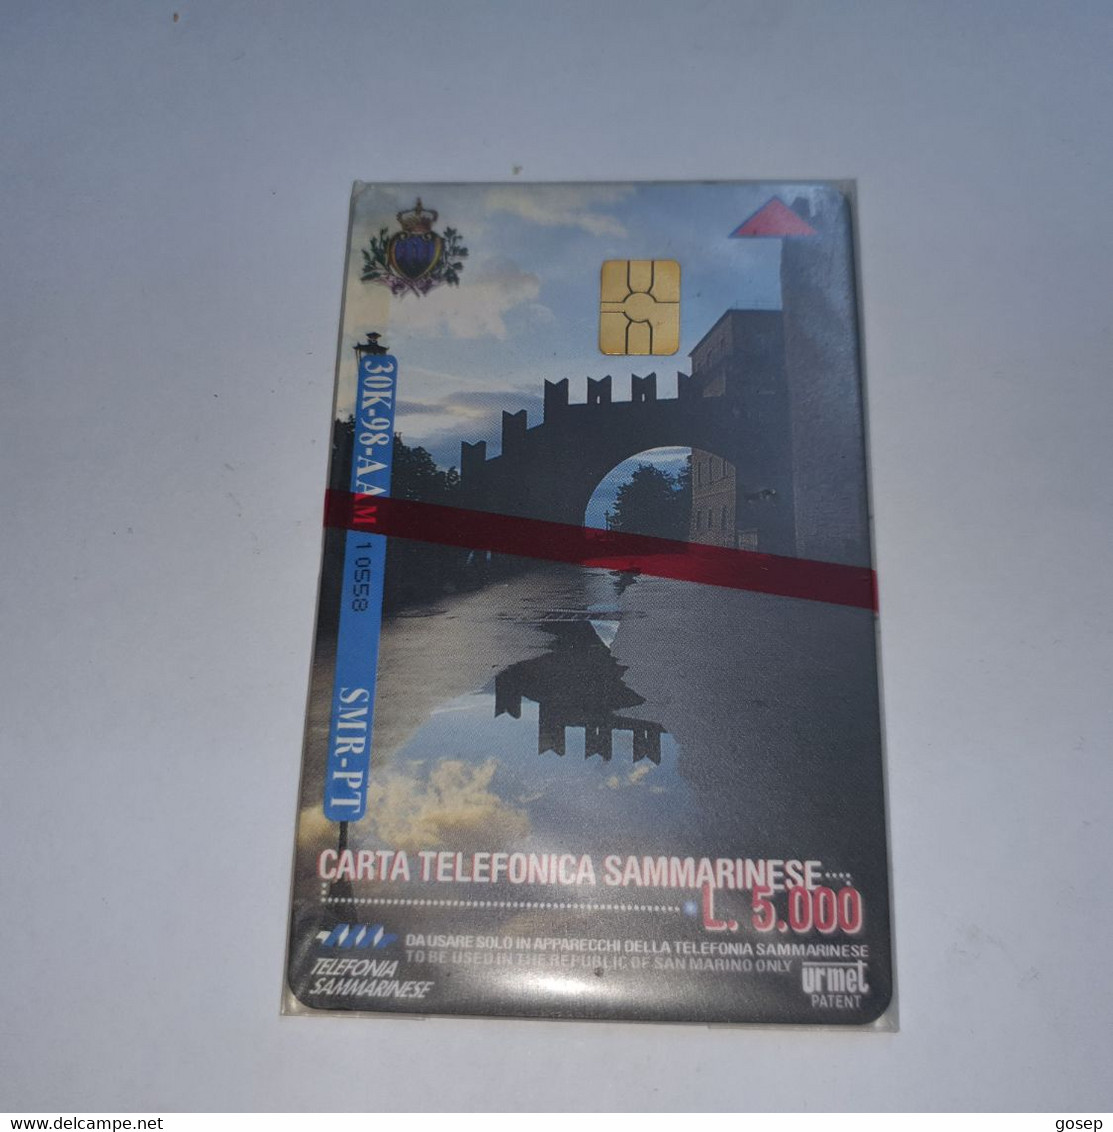 San Marino-(RSM-033a)-metting Rimini98-chip Card-(44)-(10558)-mint Card+1card Prepiad Free - San Marino